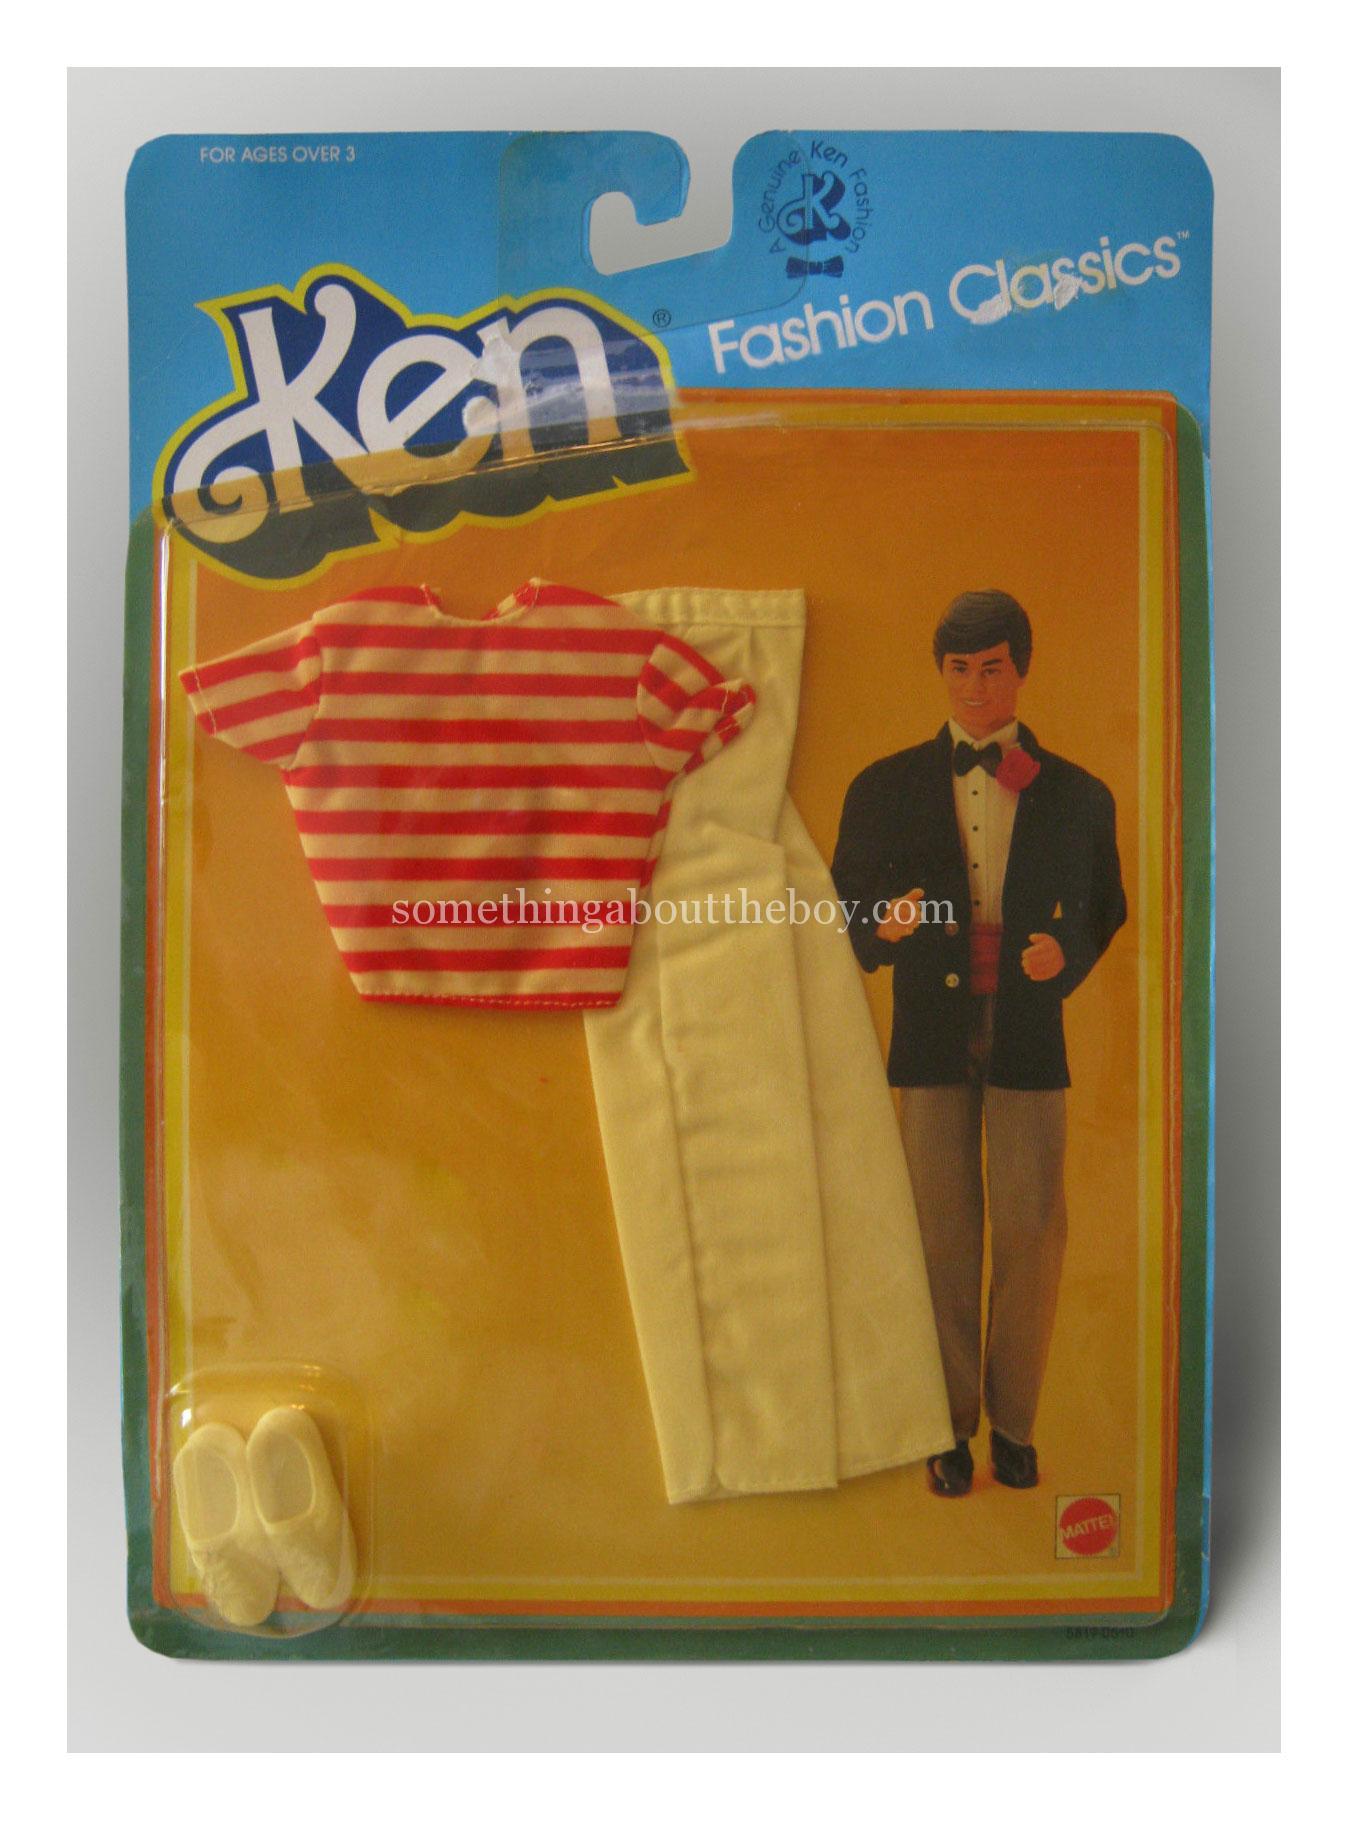 1983-4 #5823 Kmart Fashion Classics in original packaging